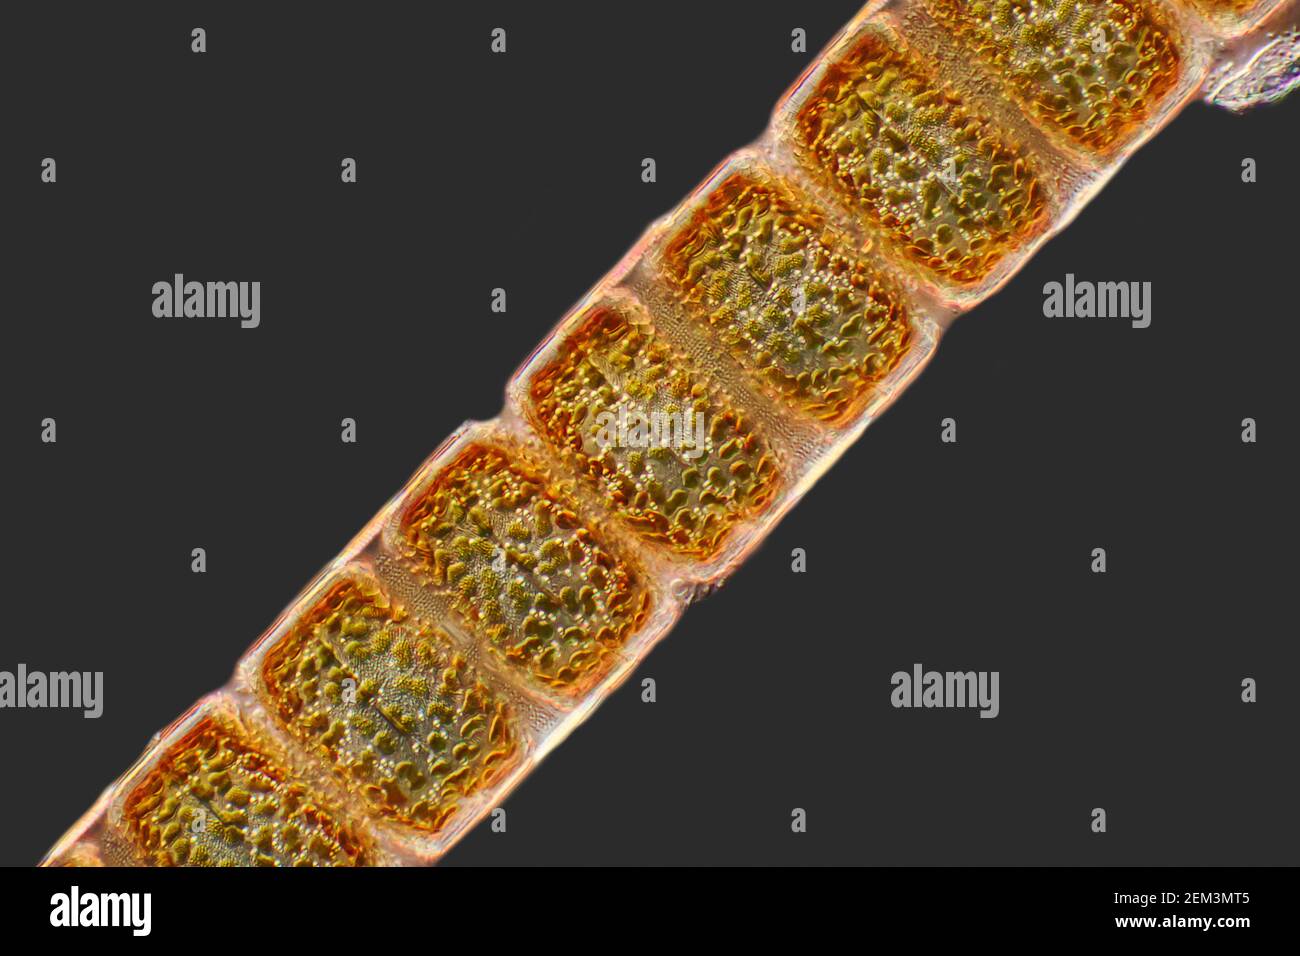 diatom (Melosira moniliformis ), dark field microscope image, magnification: x100 related to 36mm, Germany Stock Photo